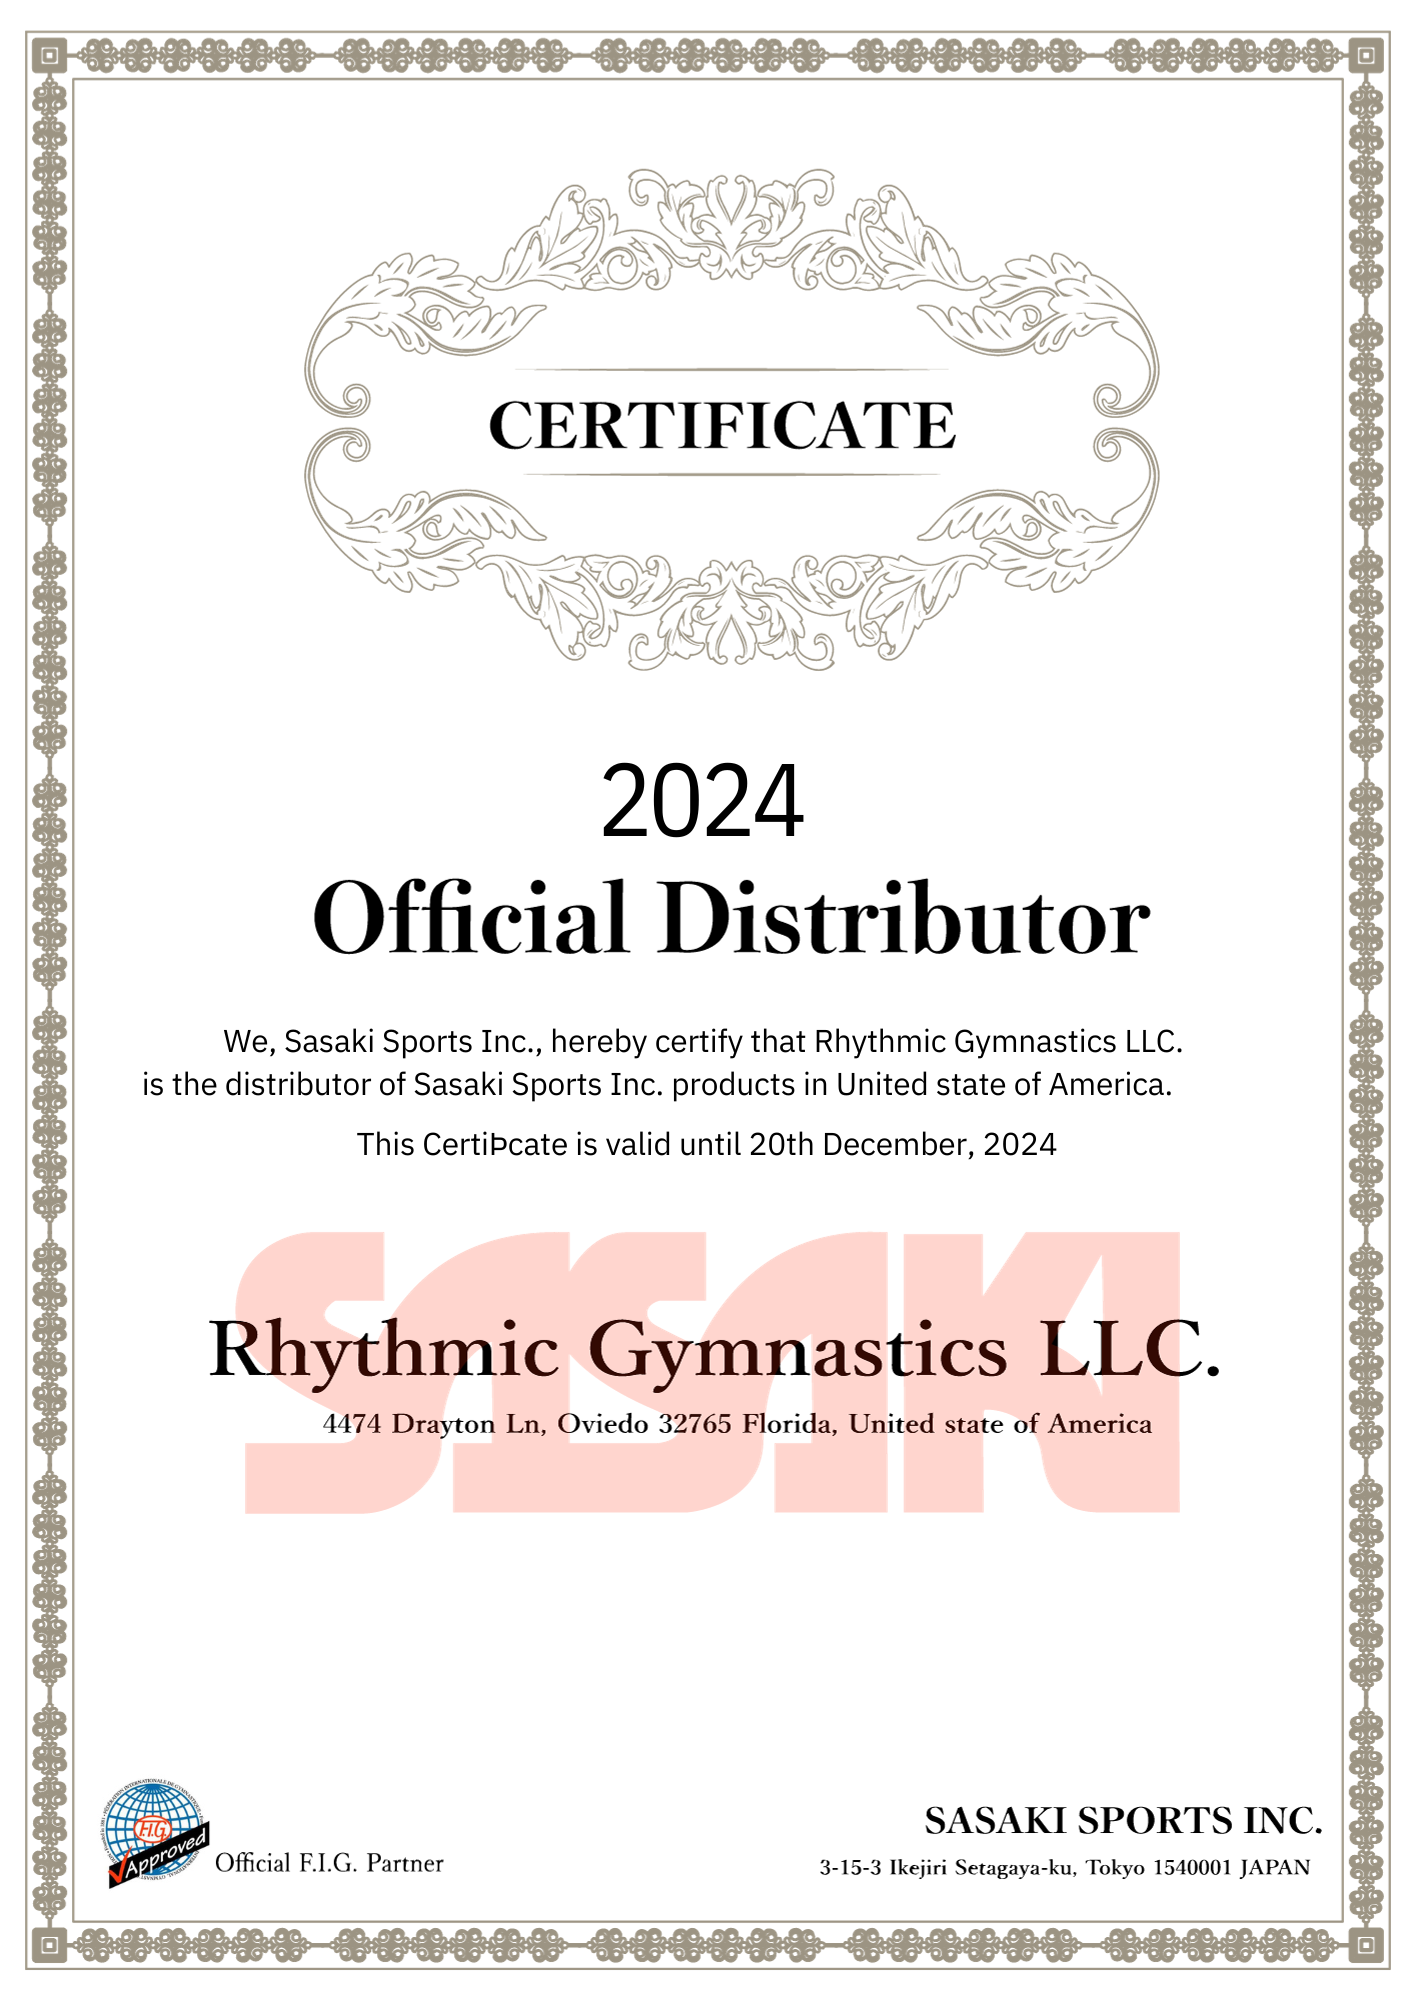 Rhythmic Gymnastics online store